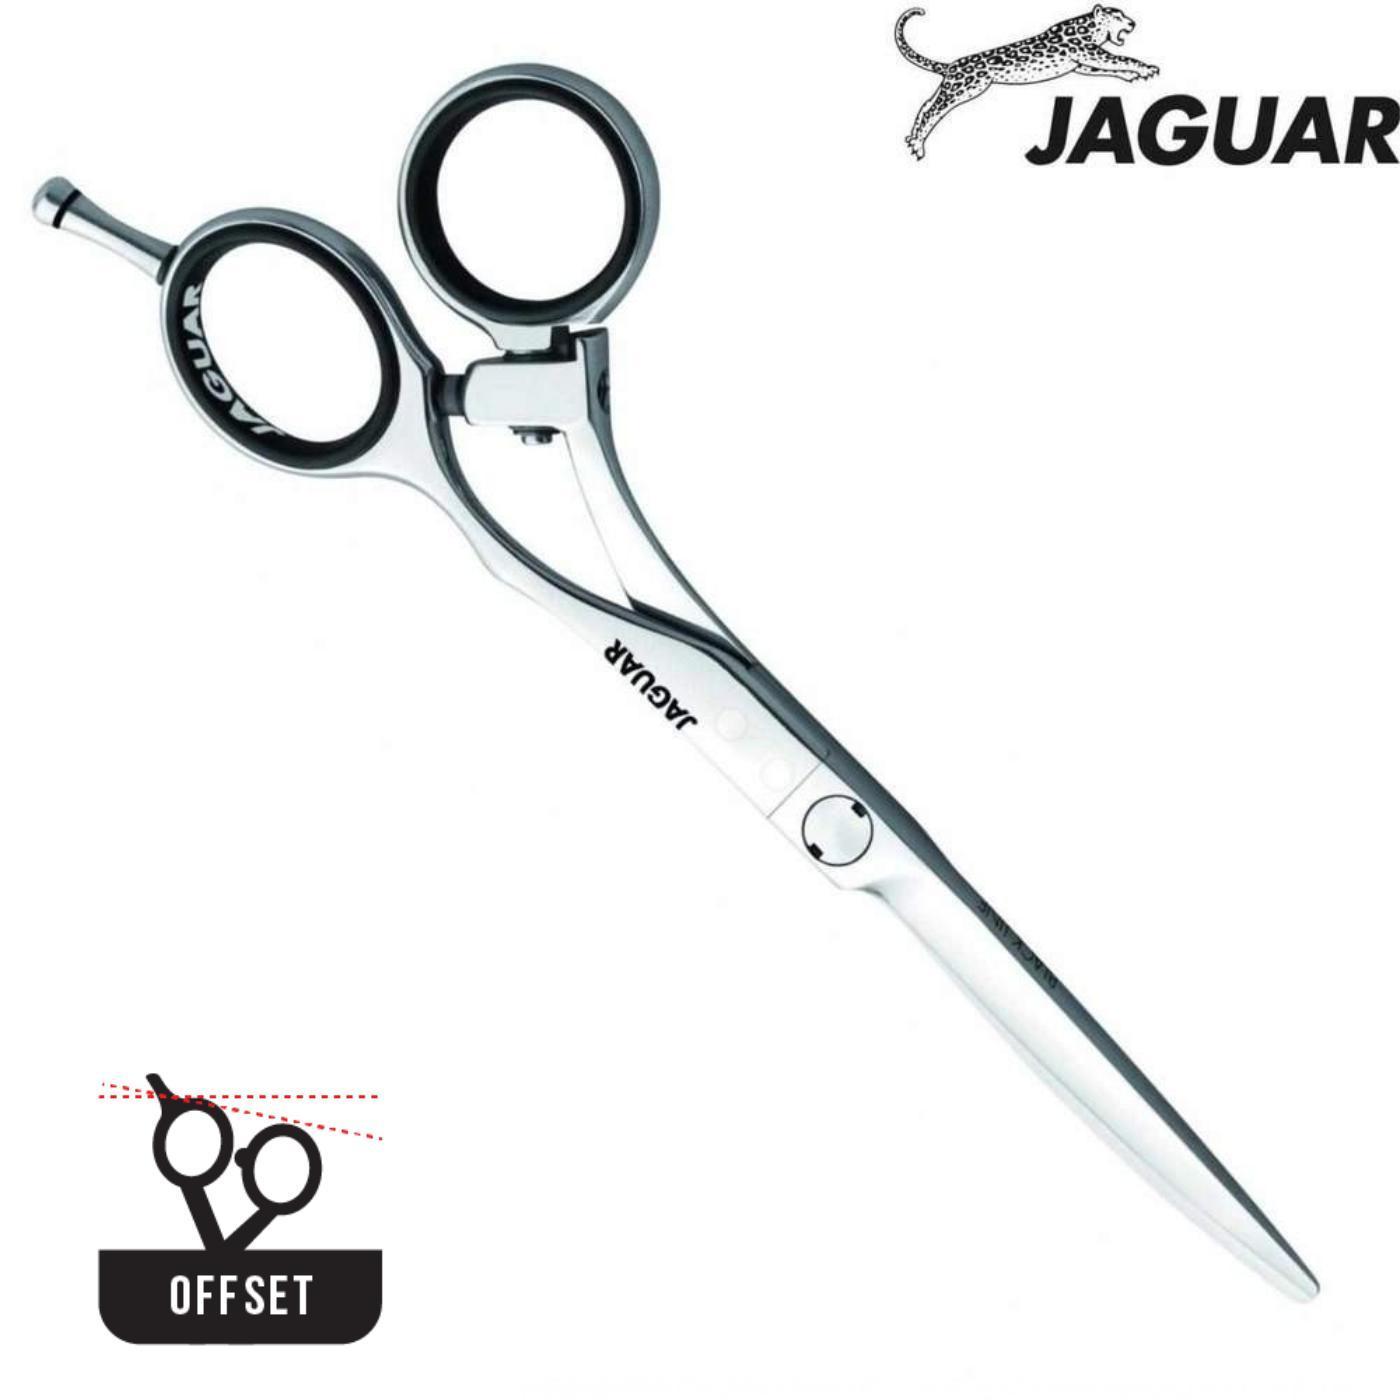 Jaguar Black Line Evolution Flex Hair Cutting Shear